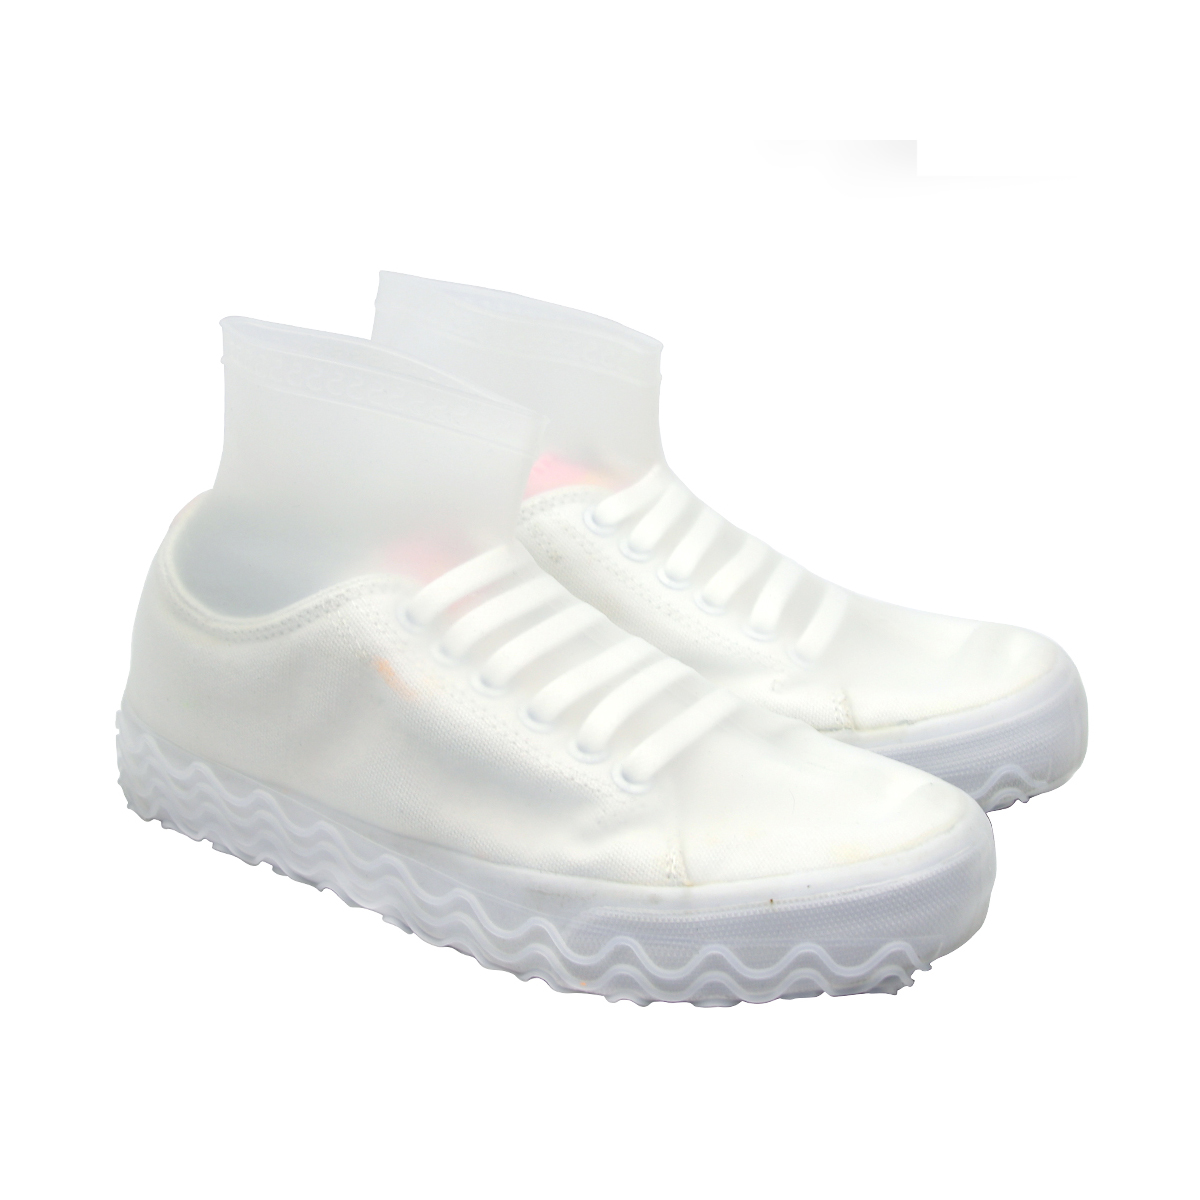 Waterproof Slip-resistant Accessories Overshoes Rubber Latex Rain Shoes Boot 